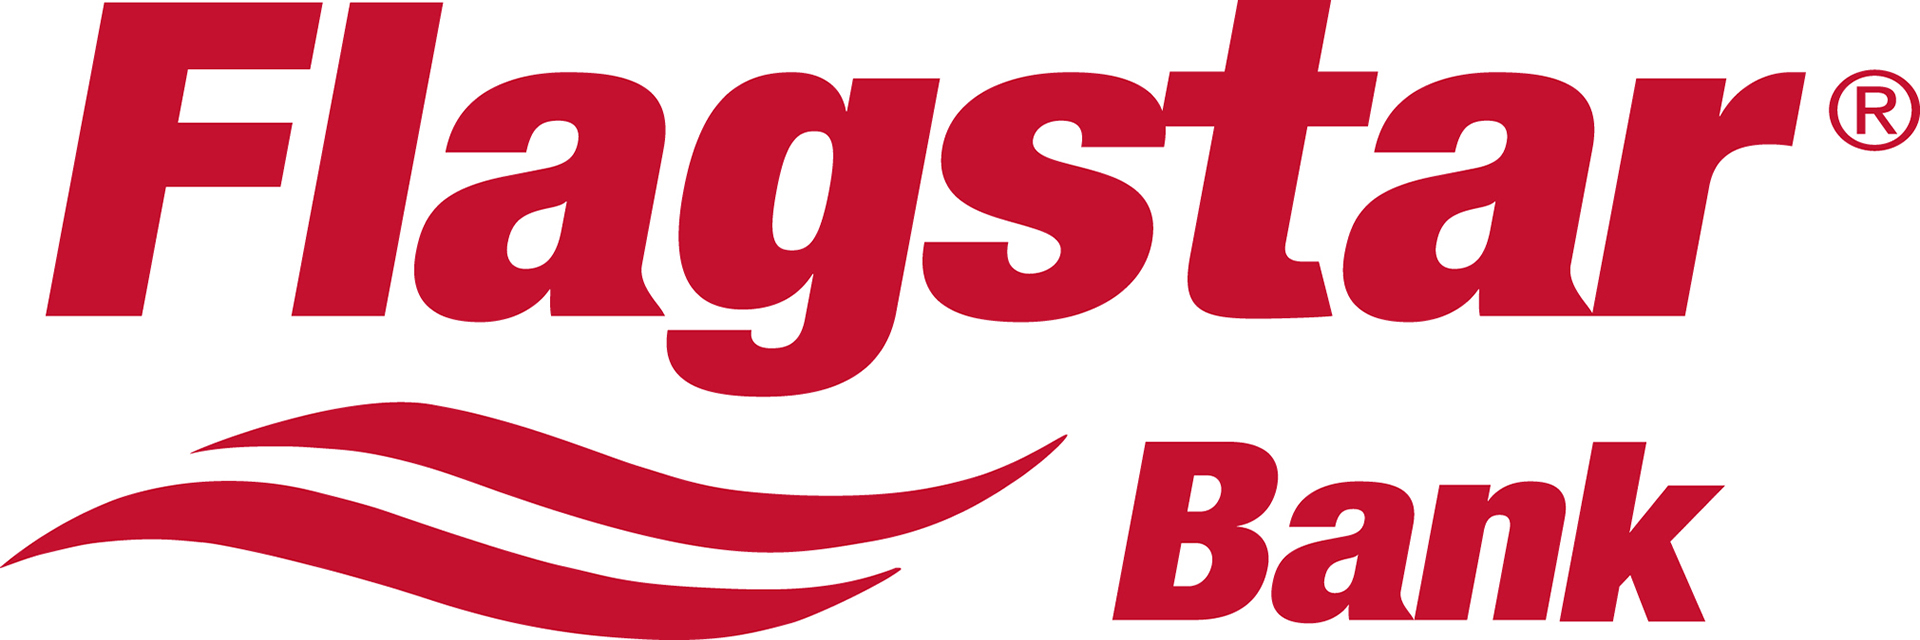 Flagstar Bancorp, Inc. Company Logo